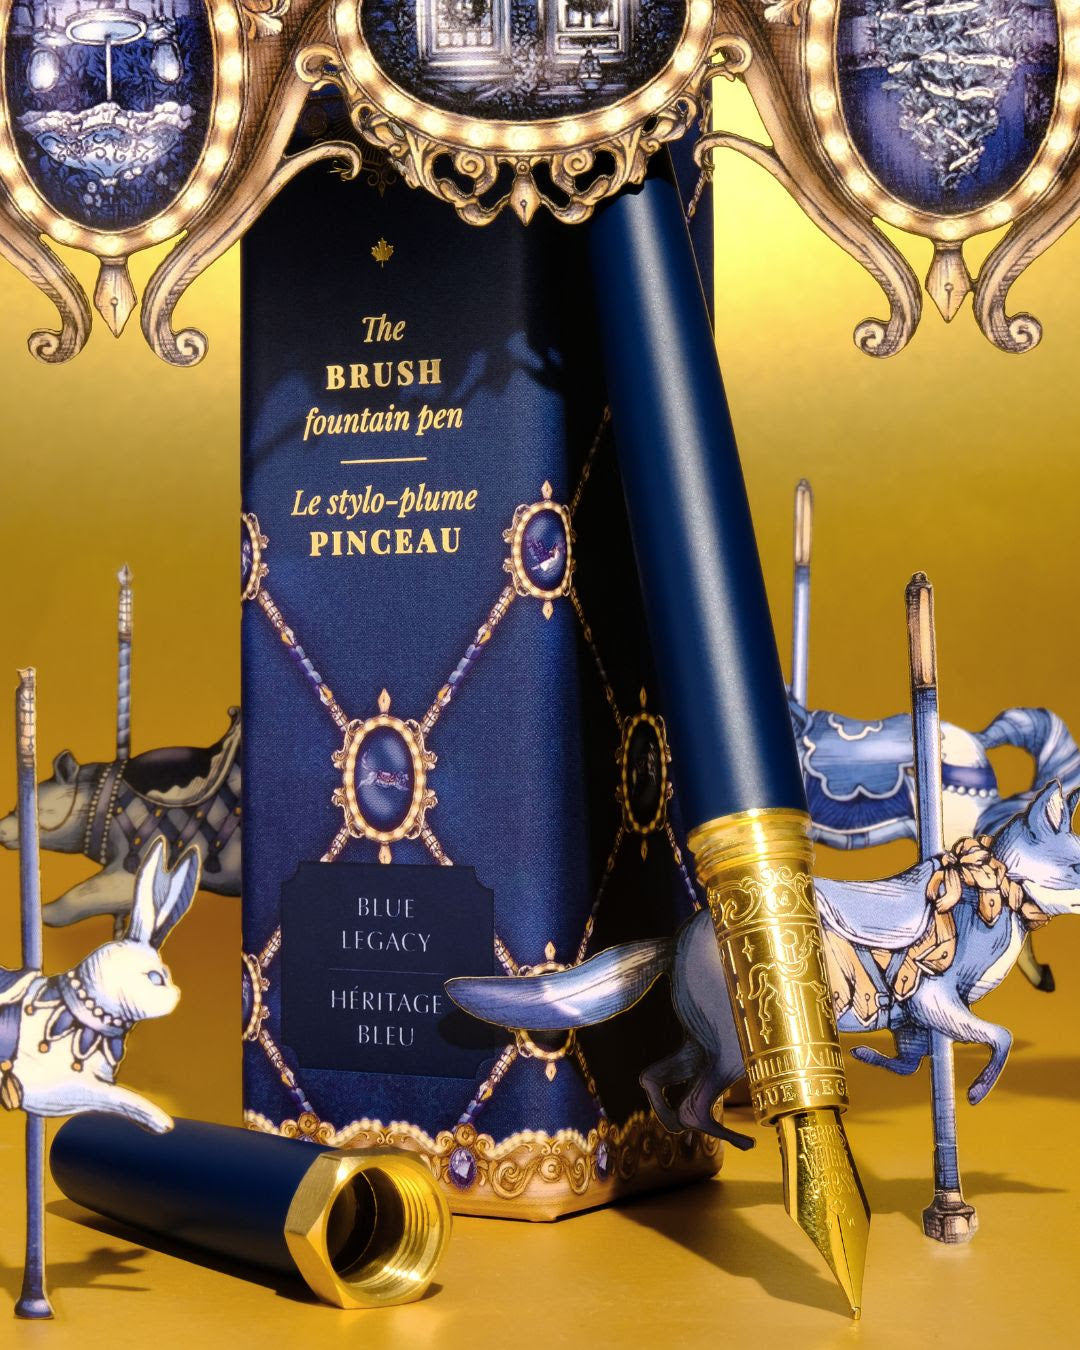 Ferris Wheel Press - Blue Legacy Satin Brush Fountain Pen - Limited Edition